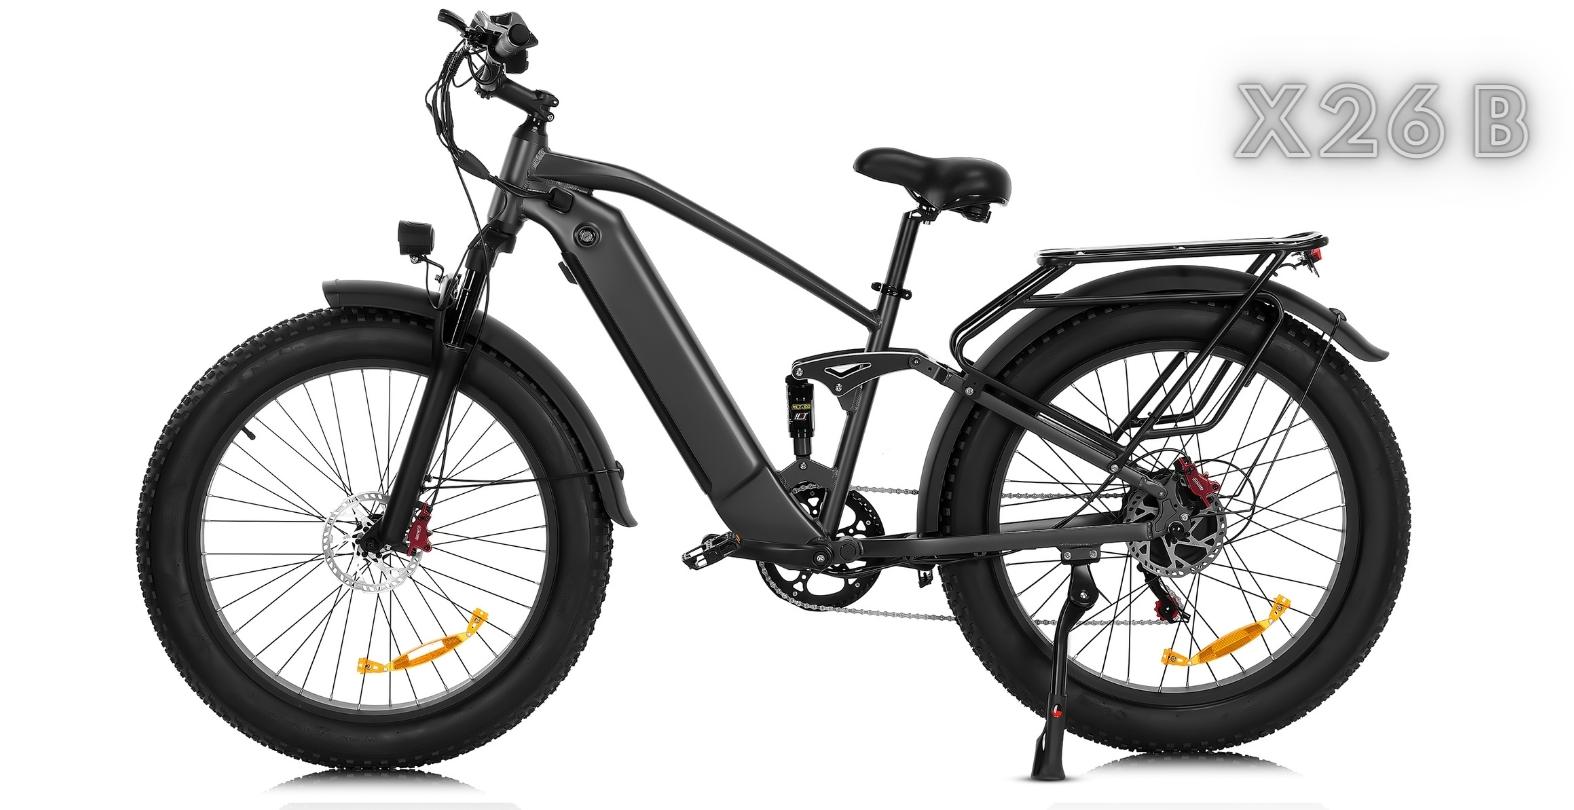 https://ailifebike.com/products/electric-bike-ailife-x26b